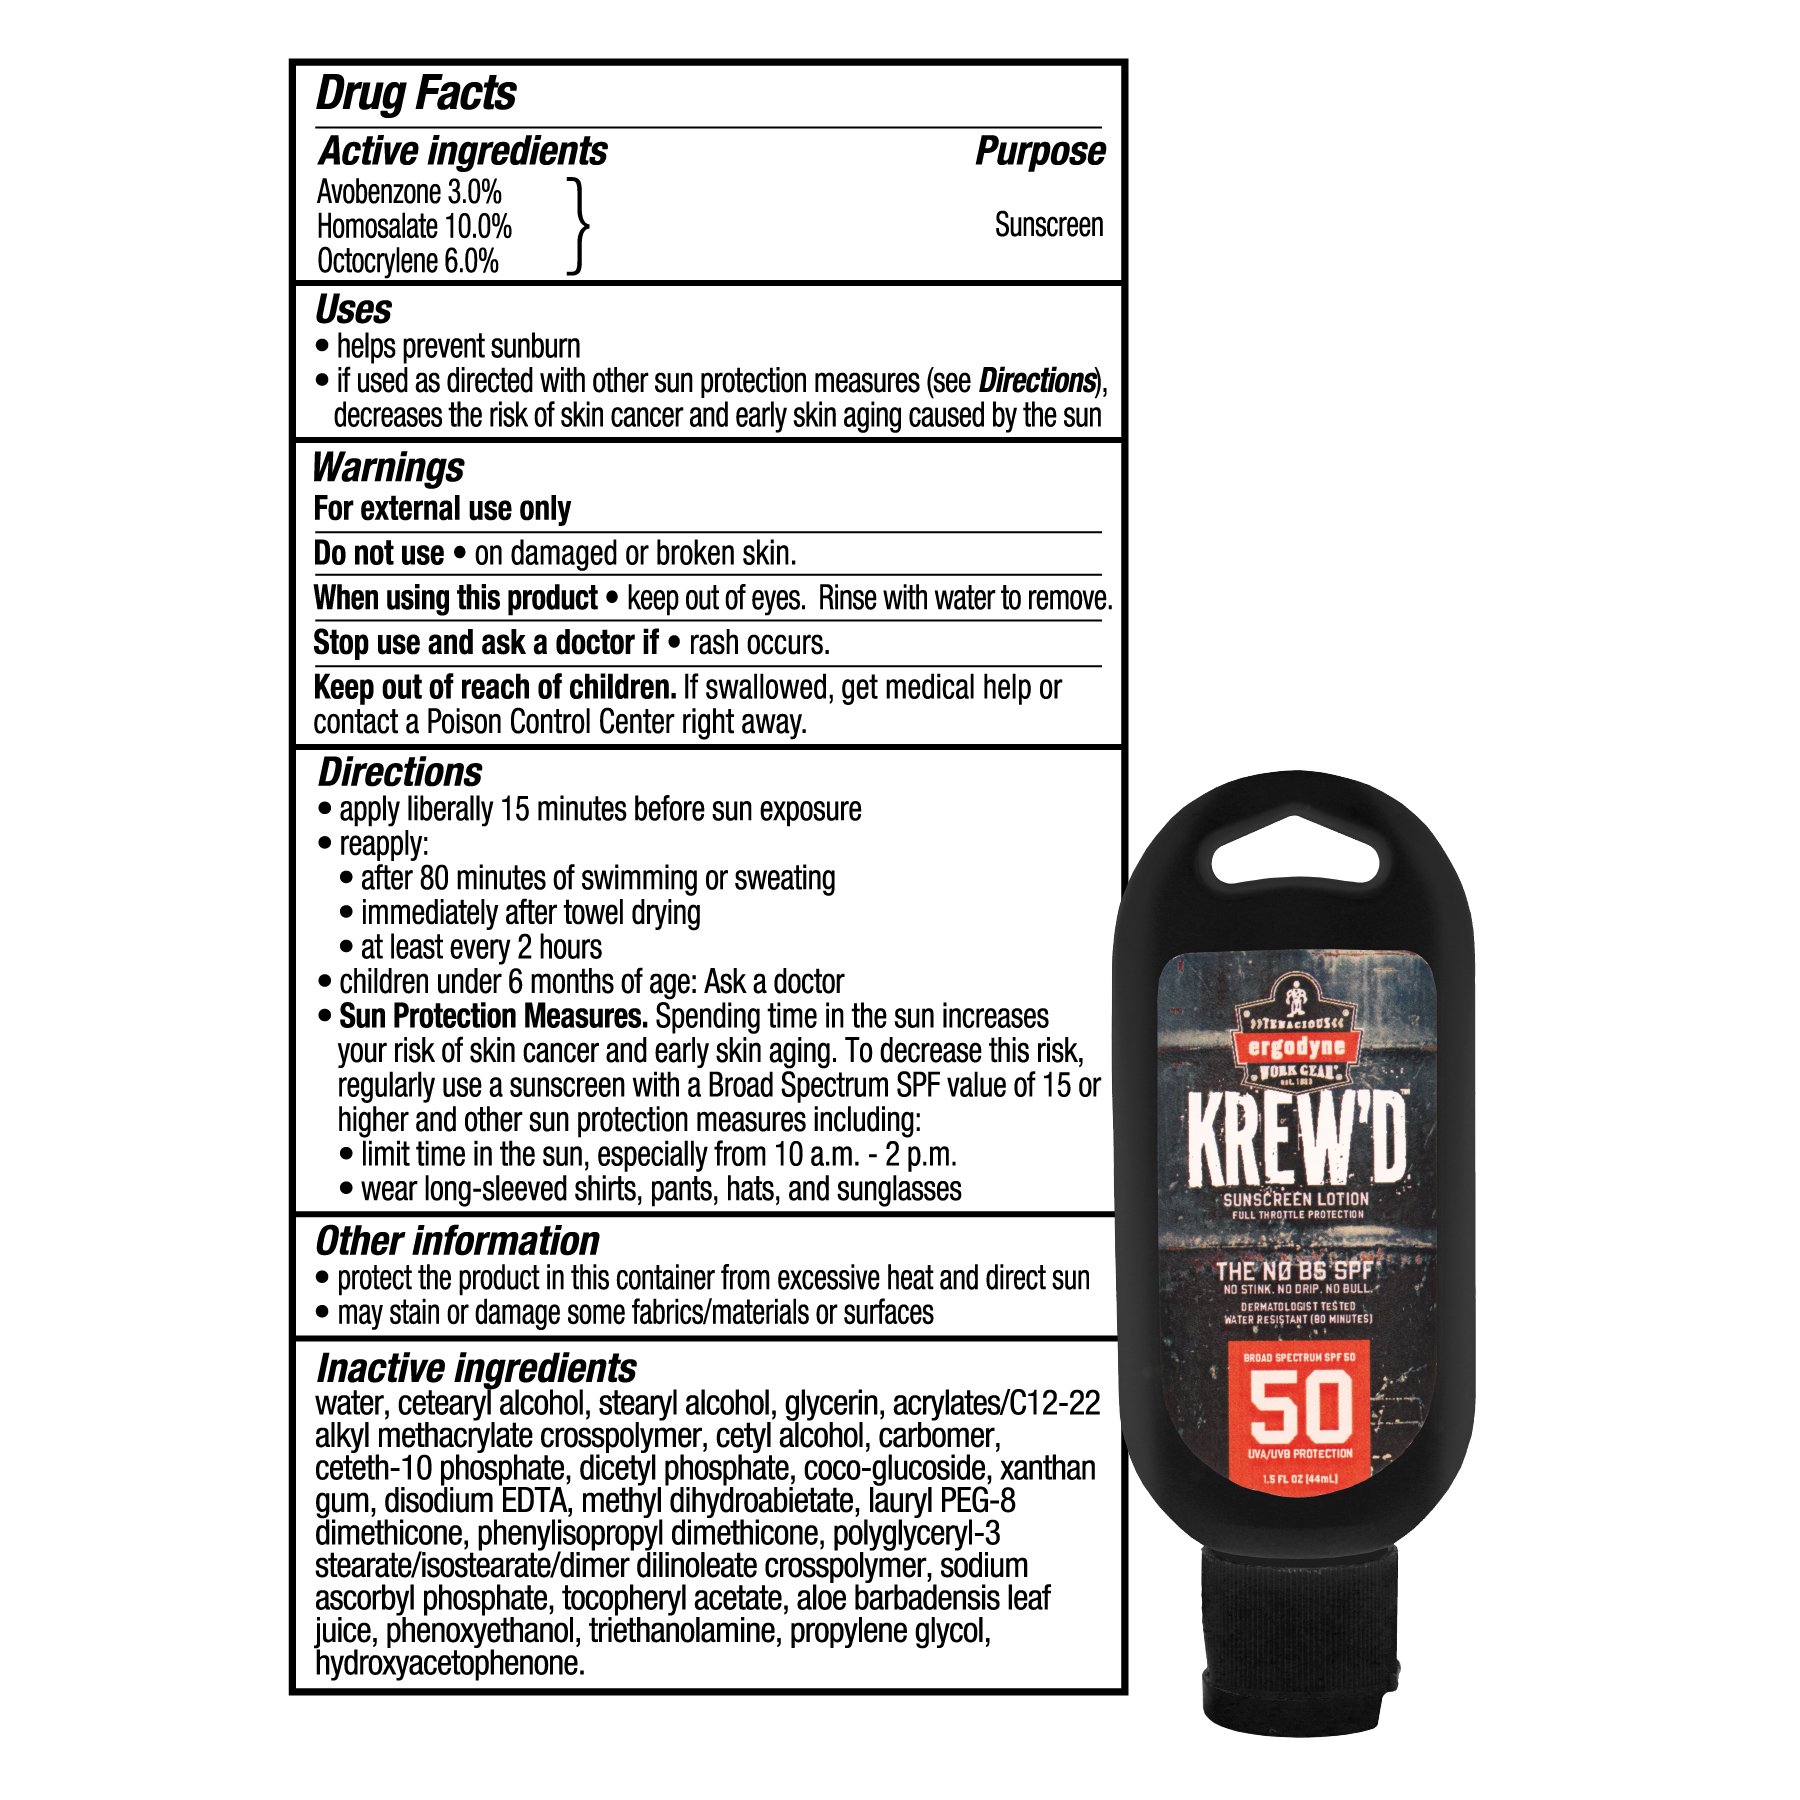 Ergodyne KREW'D 1.5oz SPF 50 Sunscreen Lotion from GME Supply